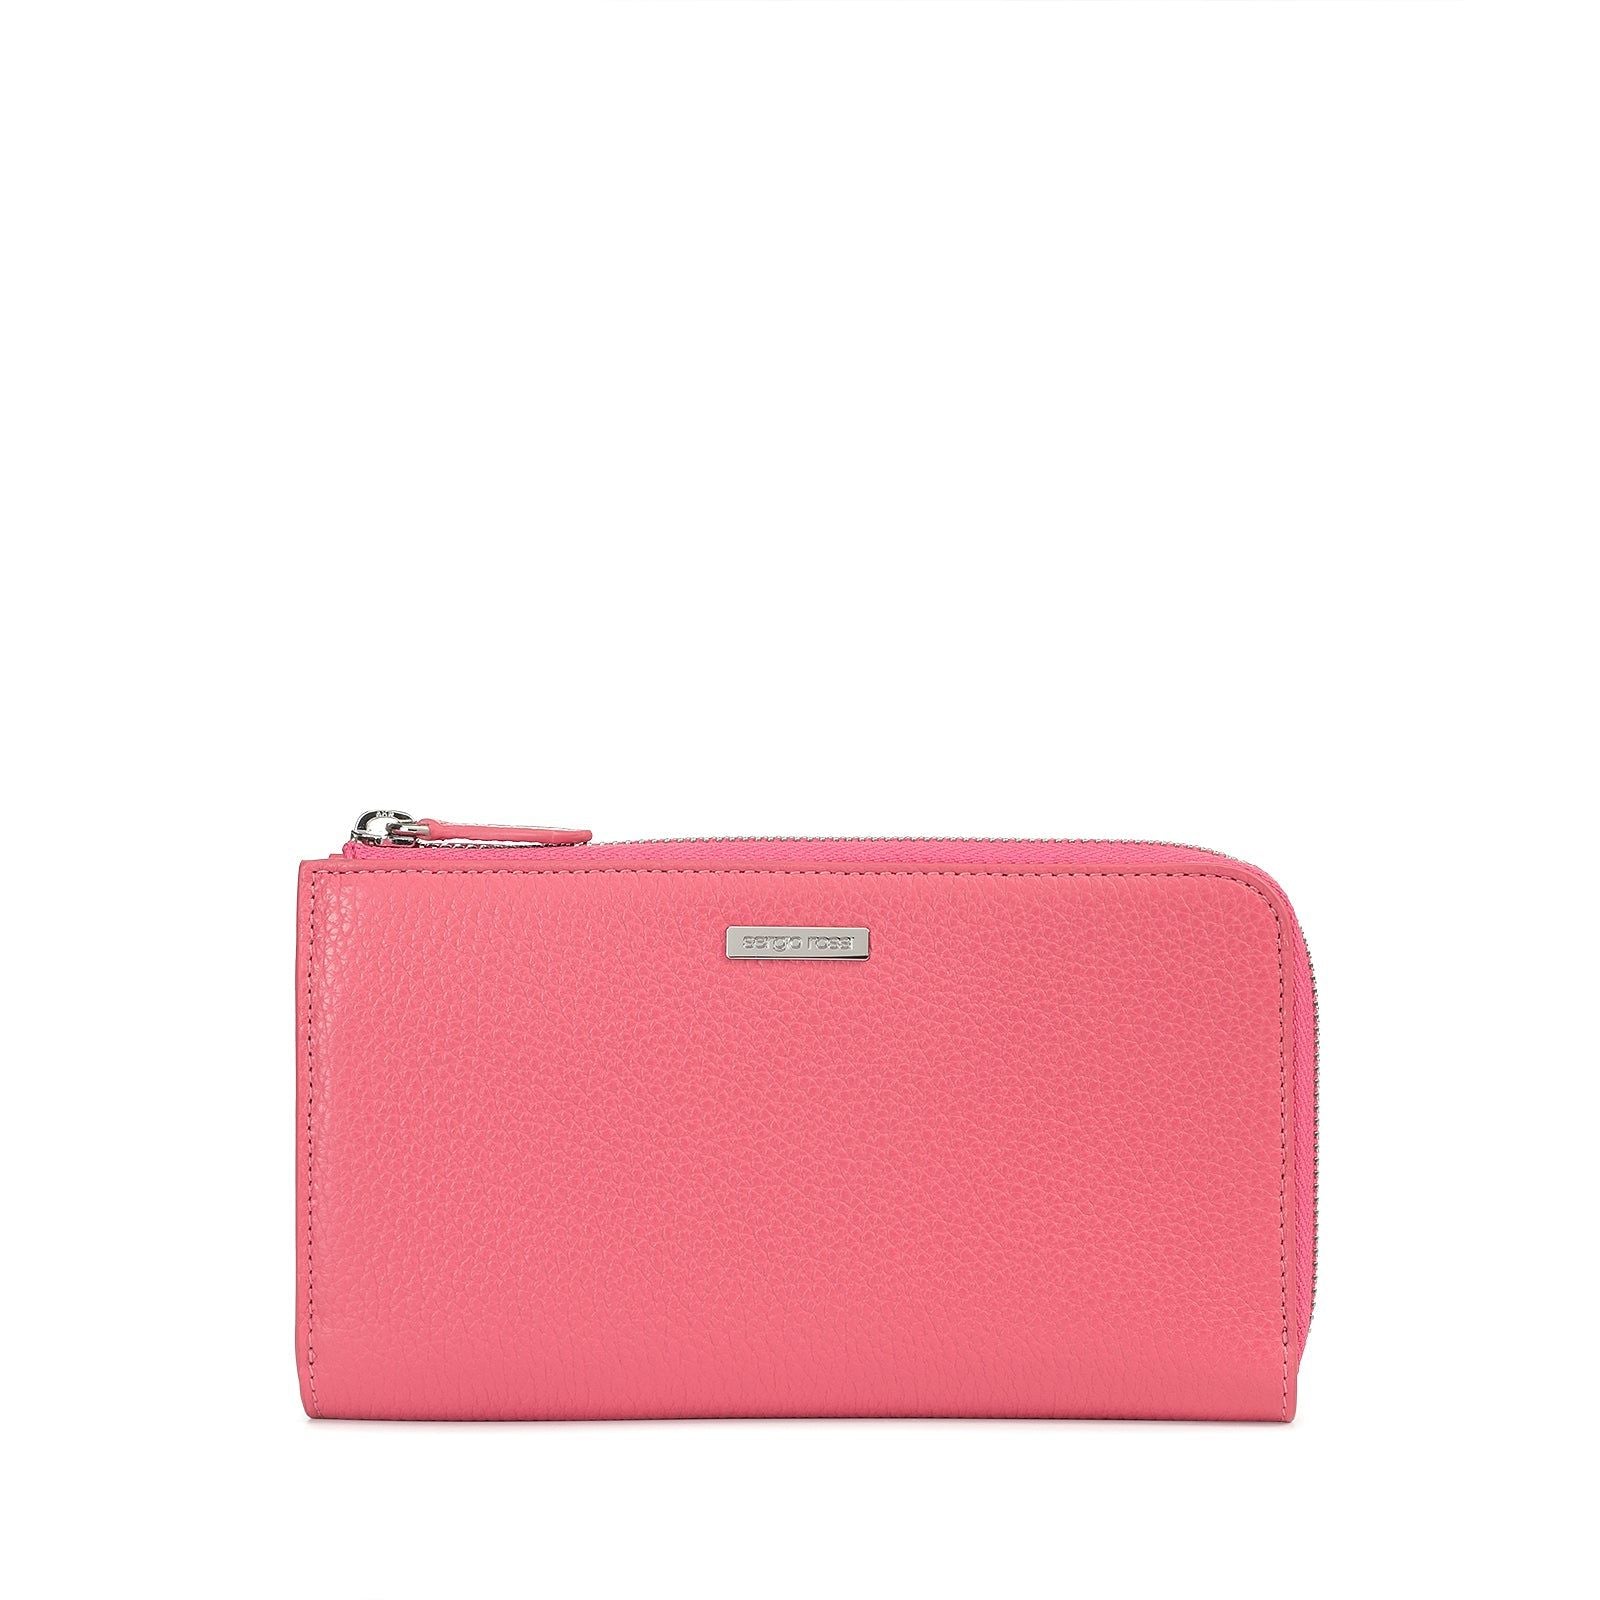 Gruppo A zipped wallet - Rosa